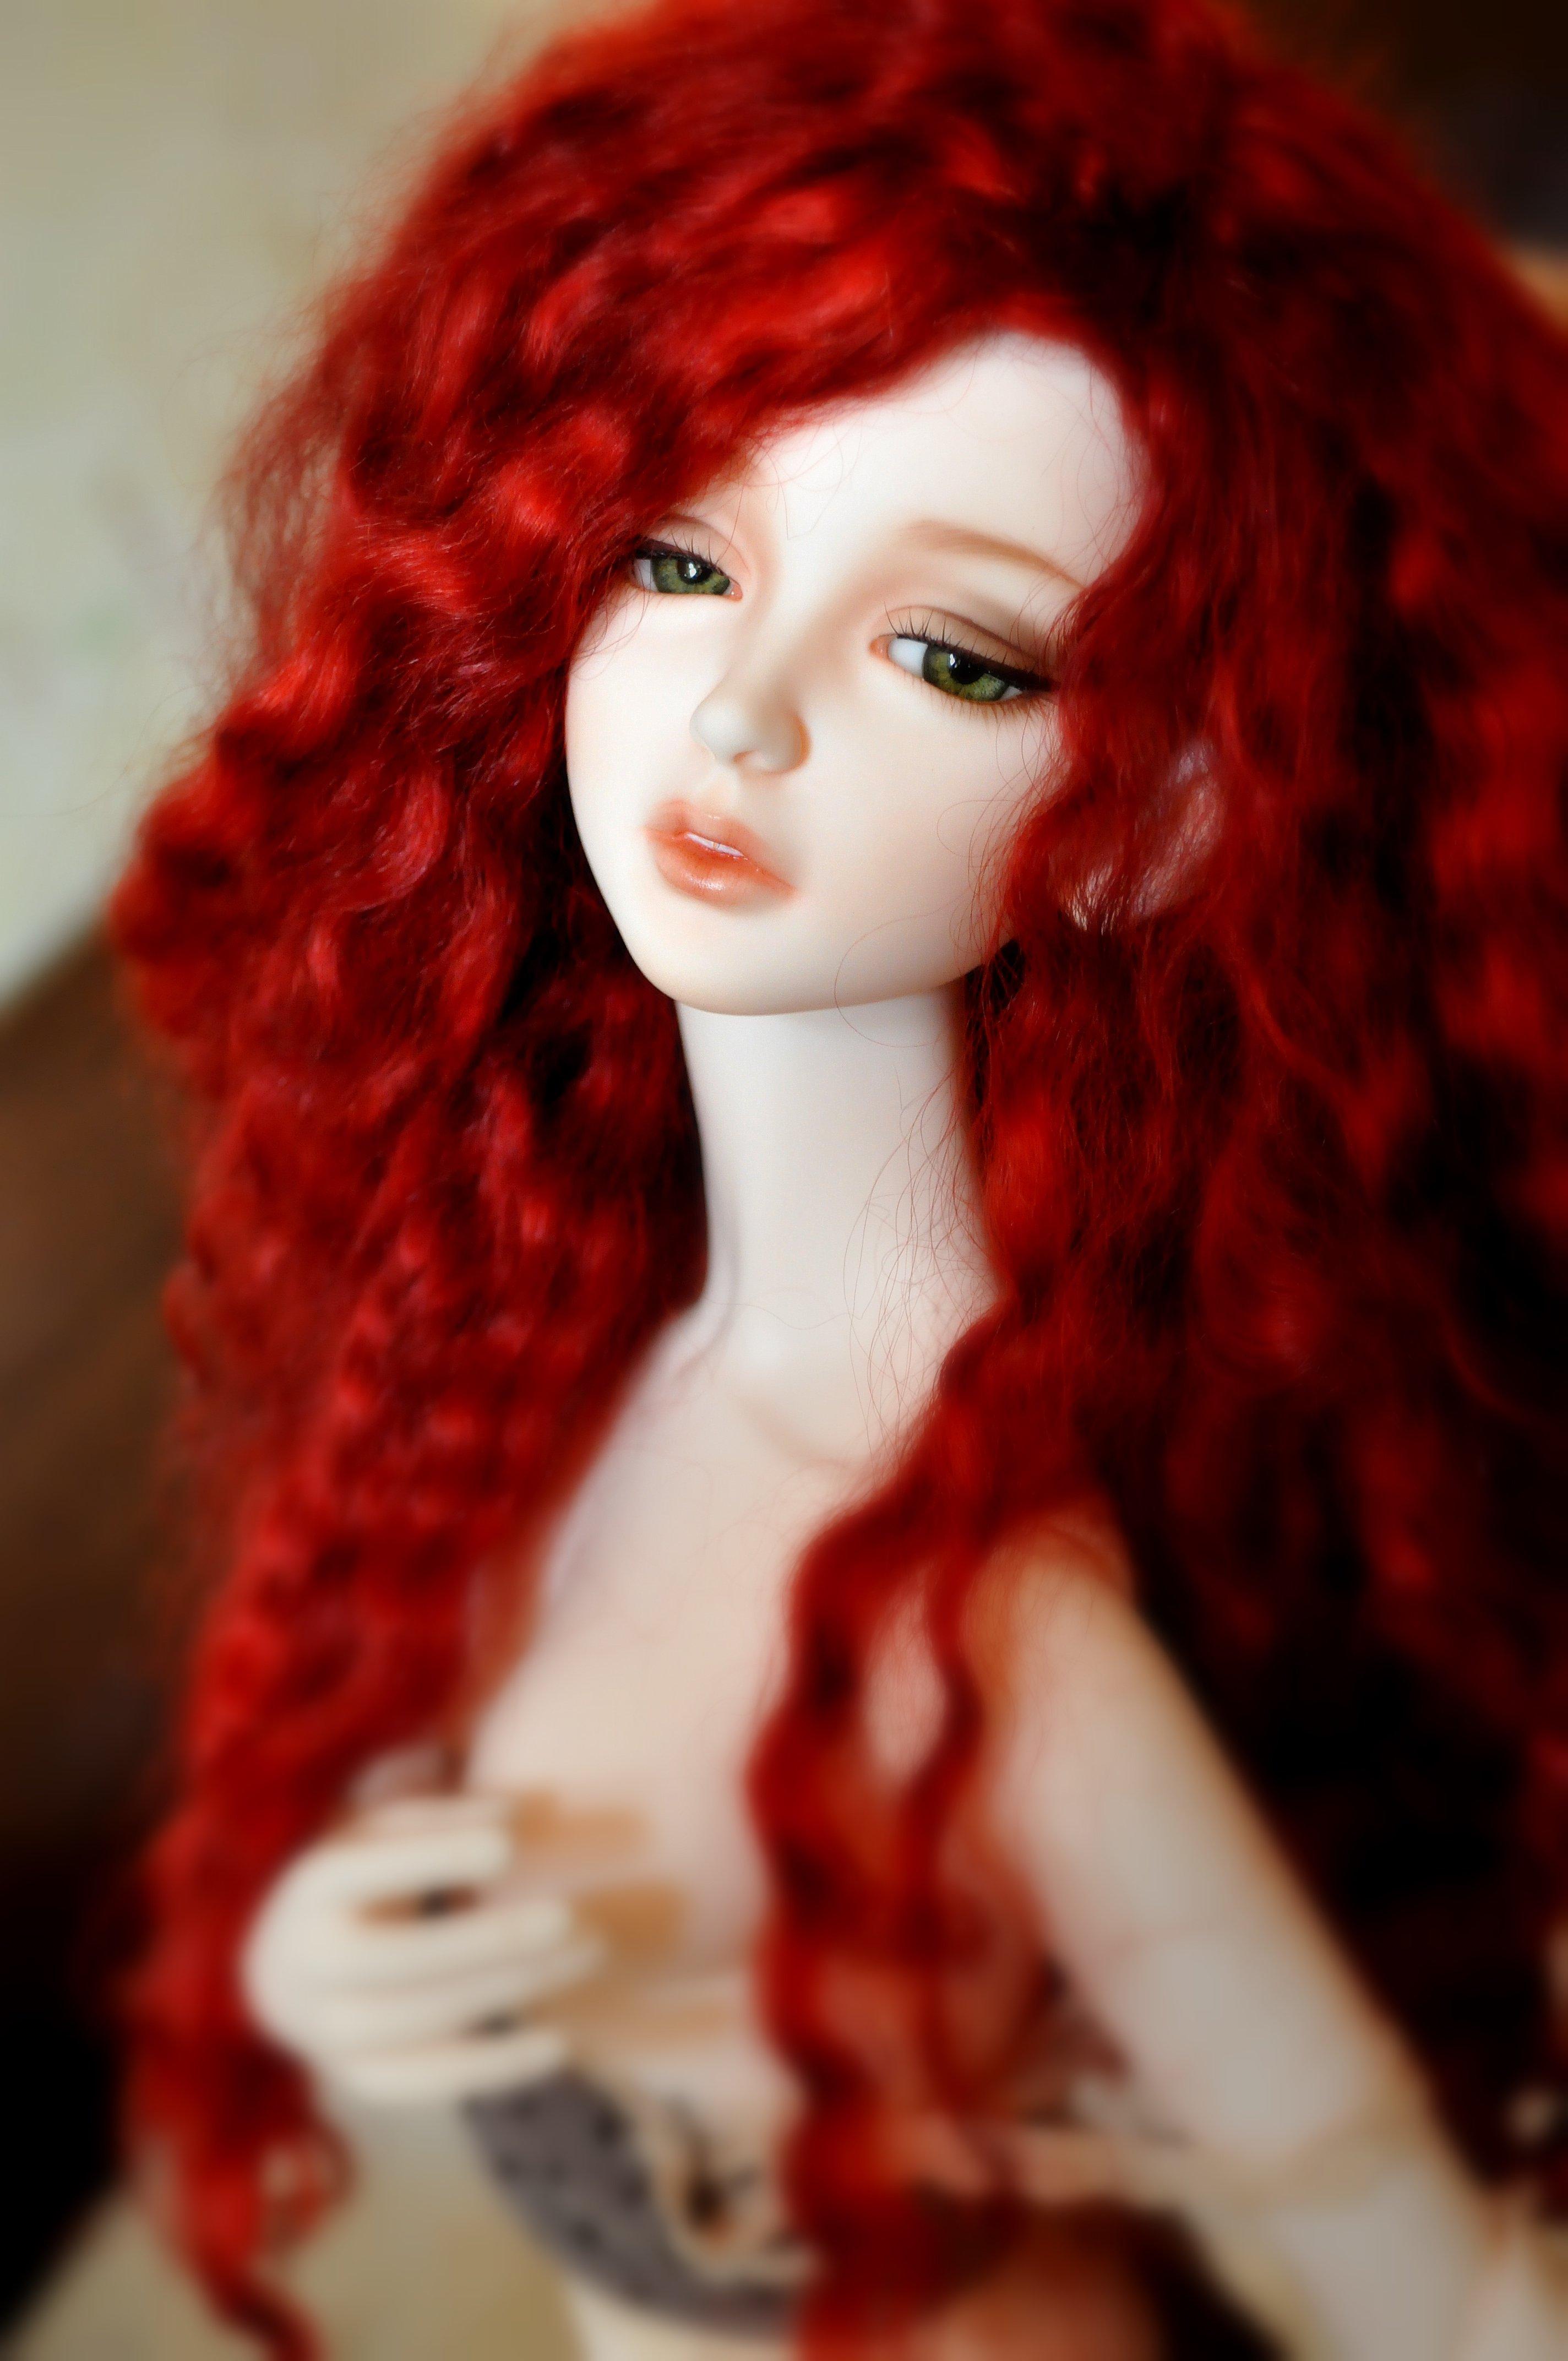 Doll baby toys girl beautiful long hair cute green eyes red